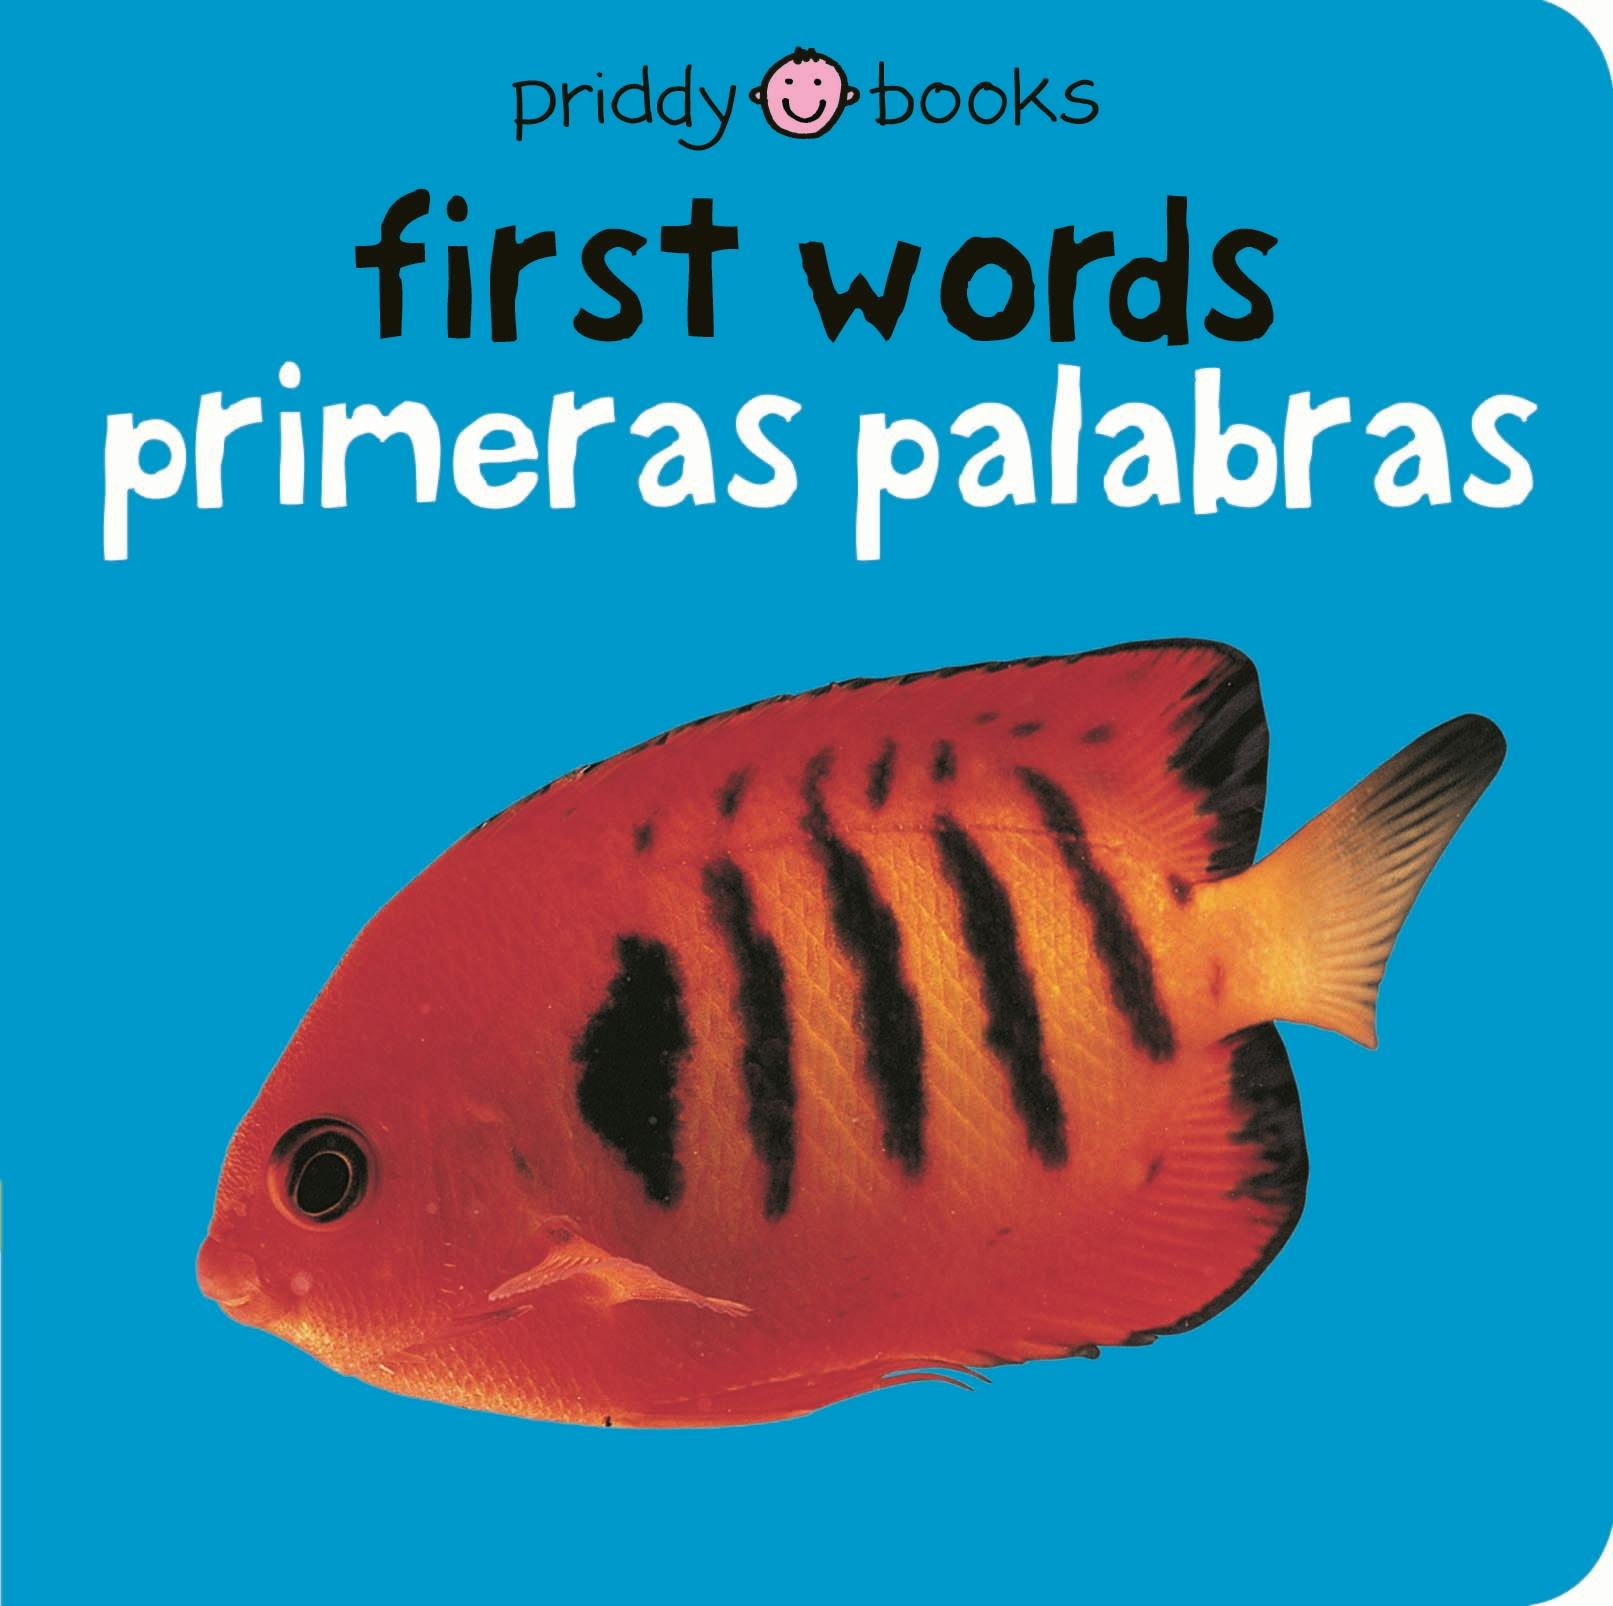 Bilingual Bright Baby First Words / Primeras palabras